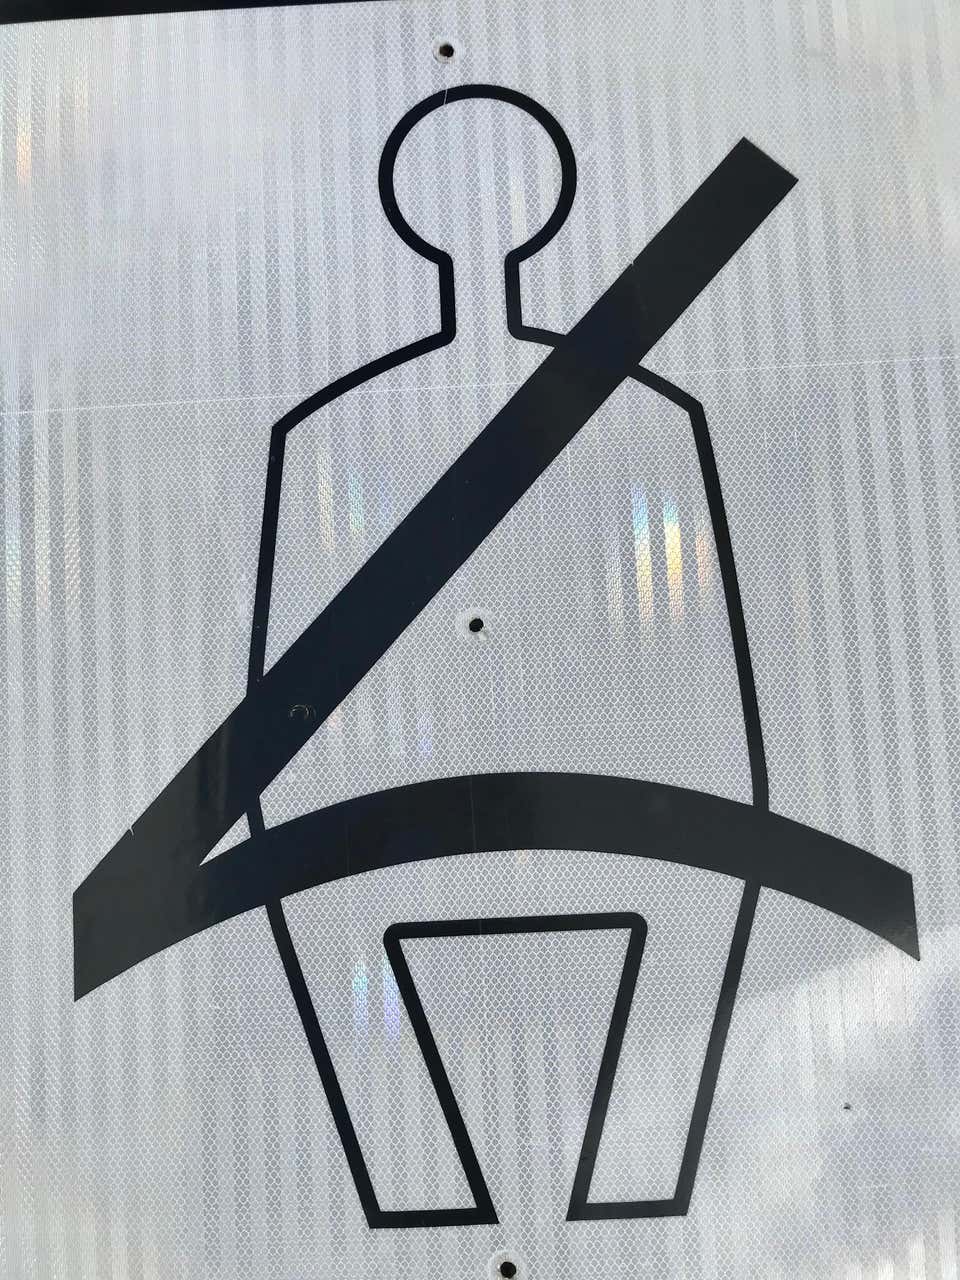 Vintage California Highway Seatbelt Sign